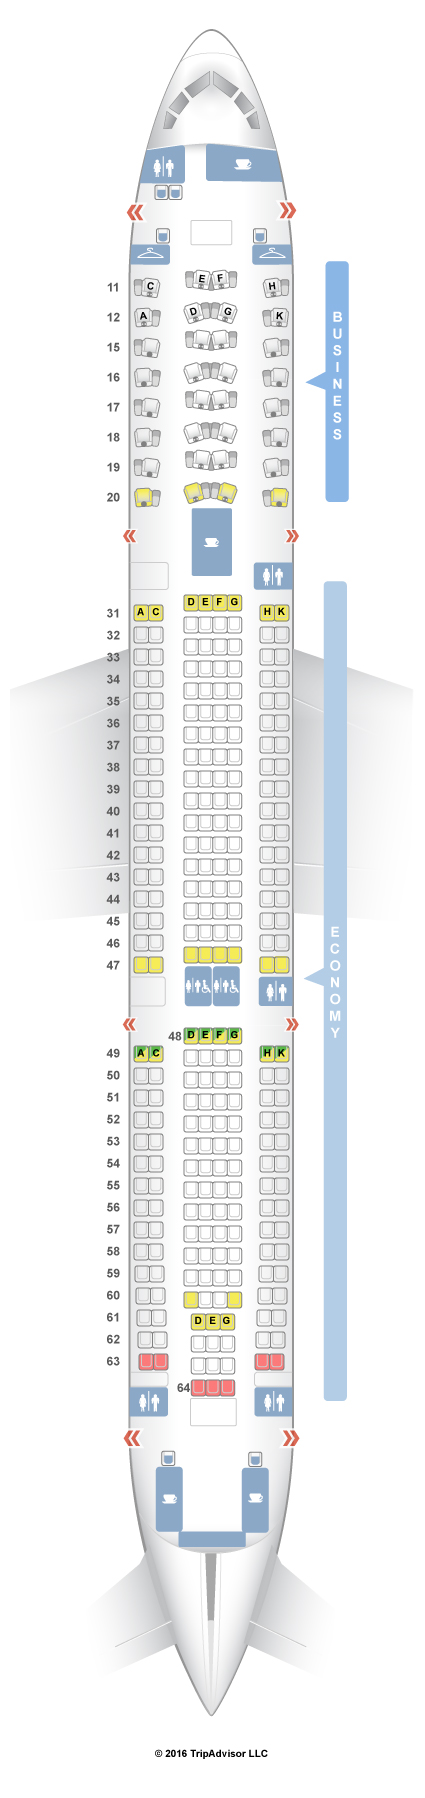 333 Plane Seating Chart